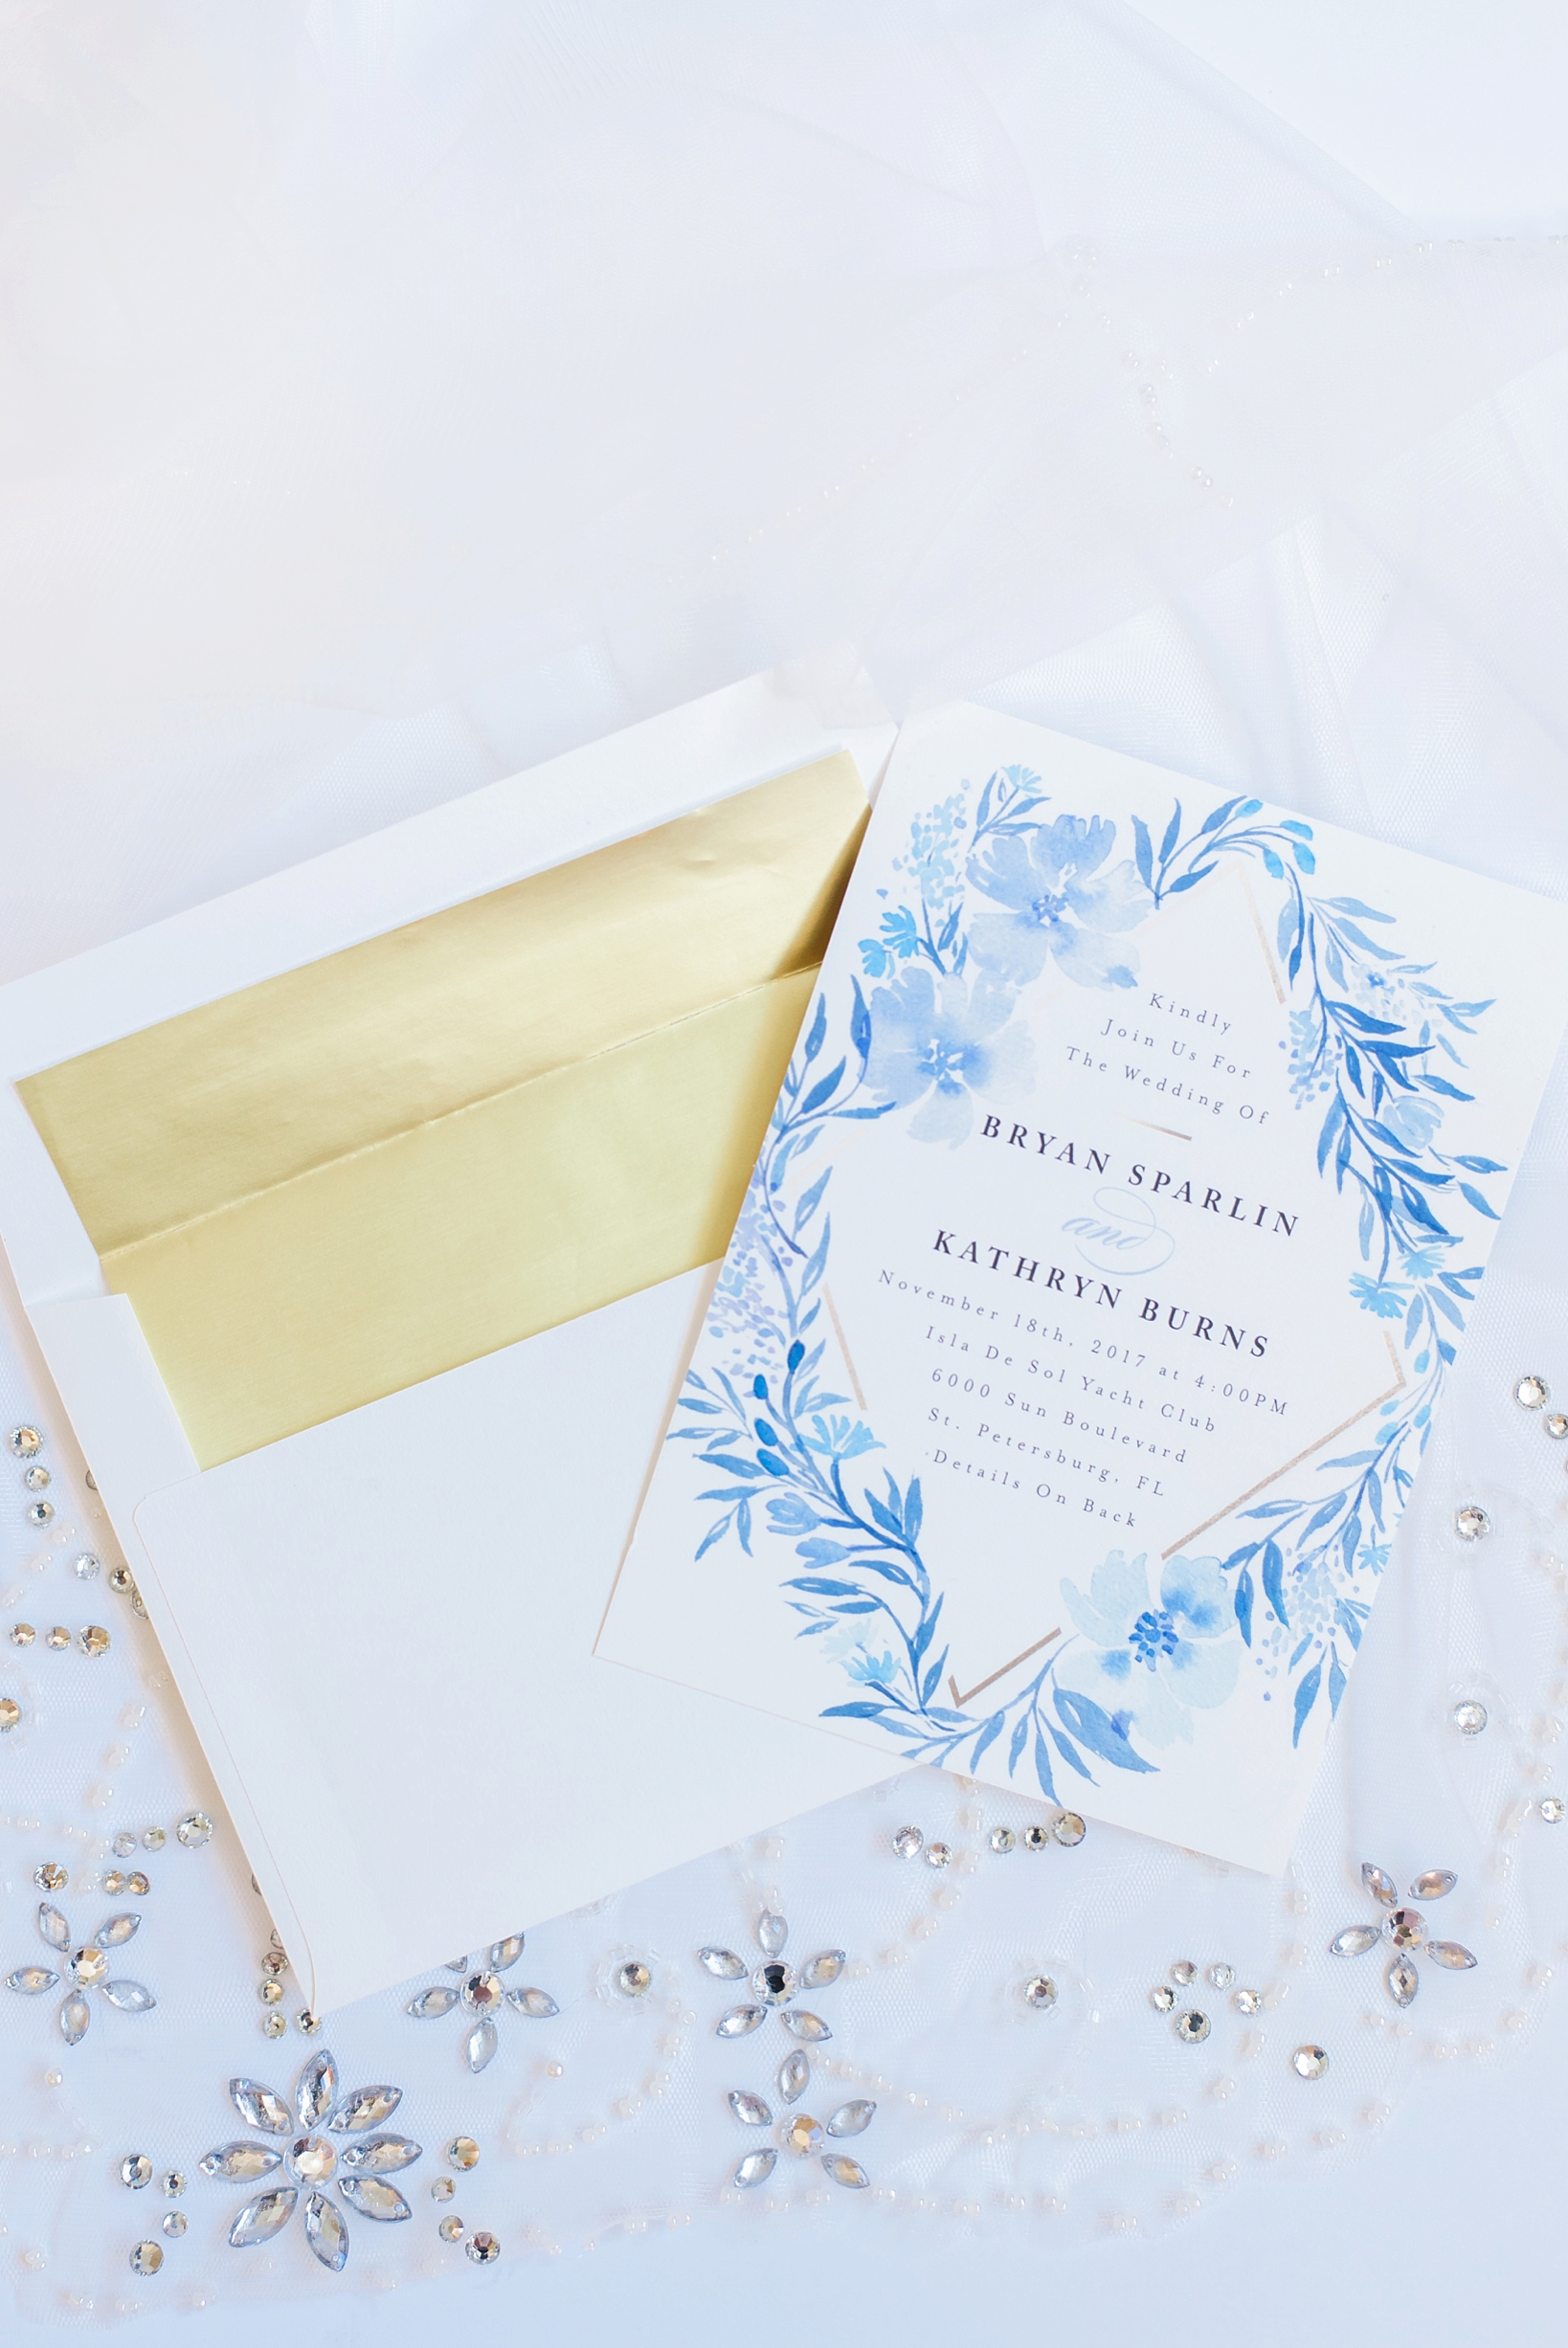 Wedding invitation and envelope on the wedding dress